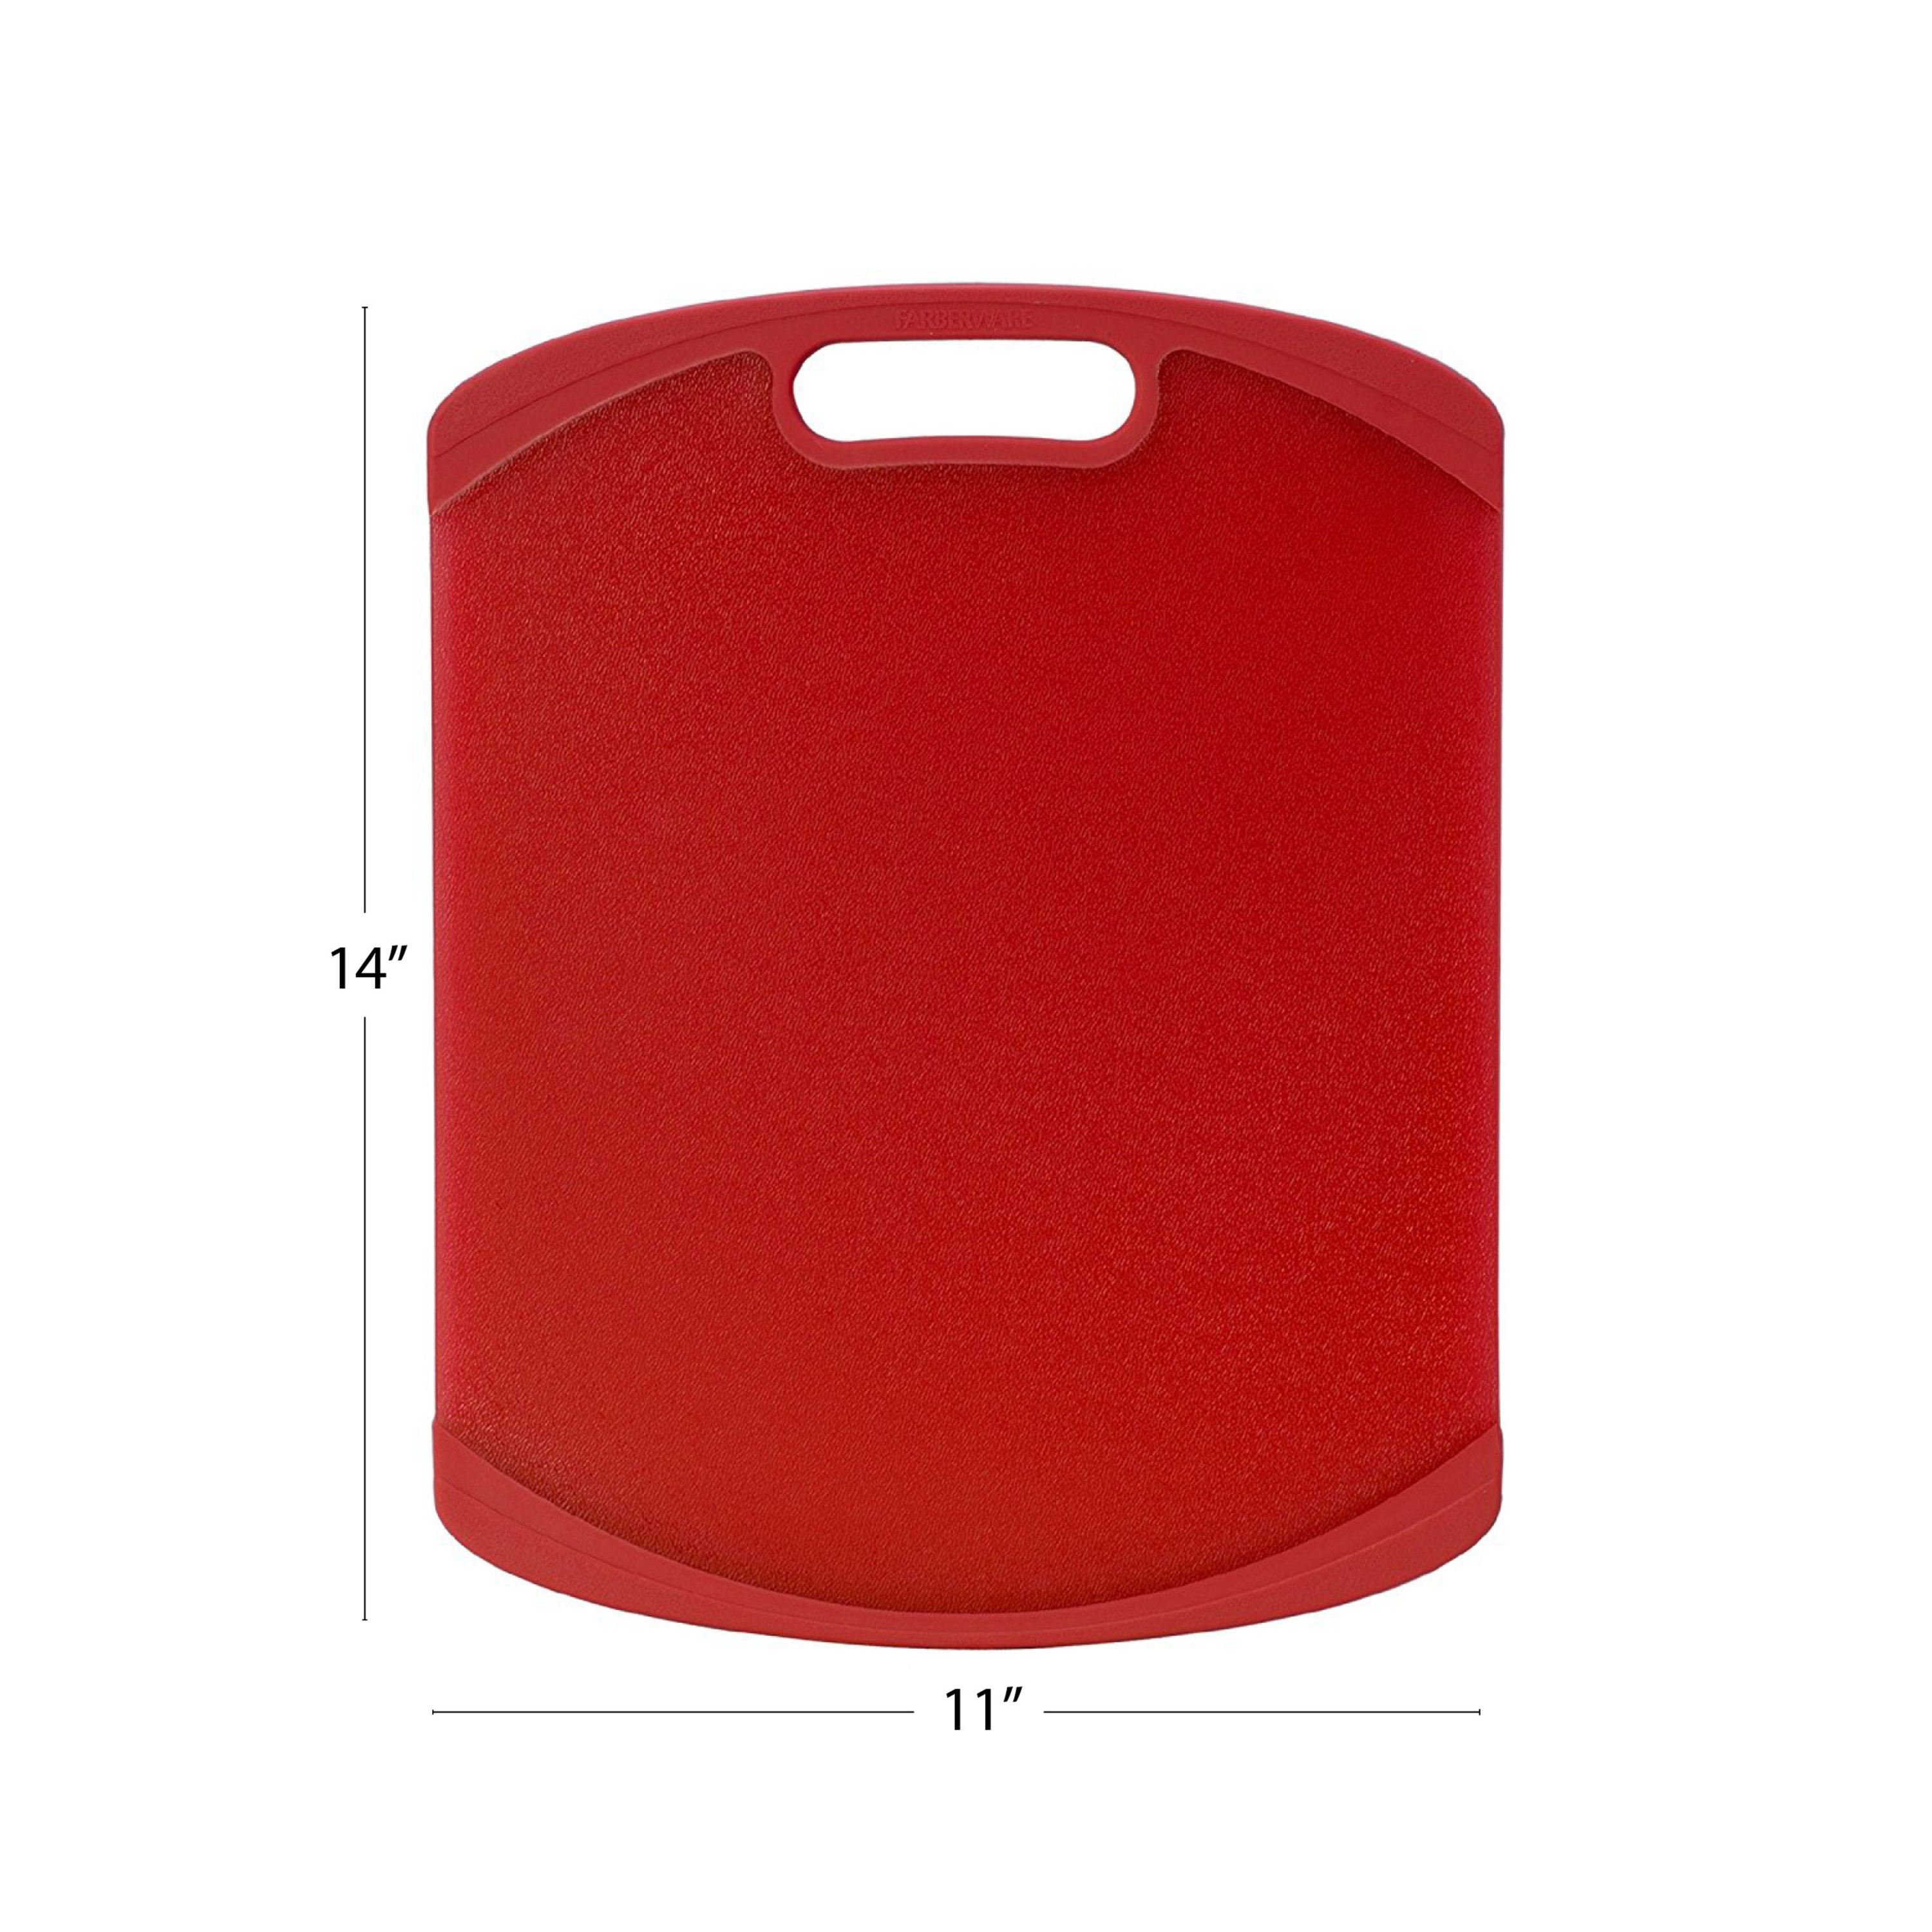 Farberware Plastic 11-inch x 14-inch Nonslip Cutting Board, Translucent Red - image 3 of 6